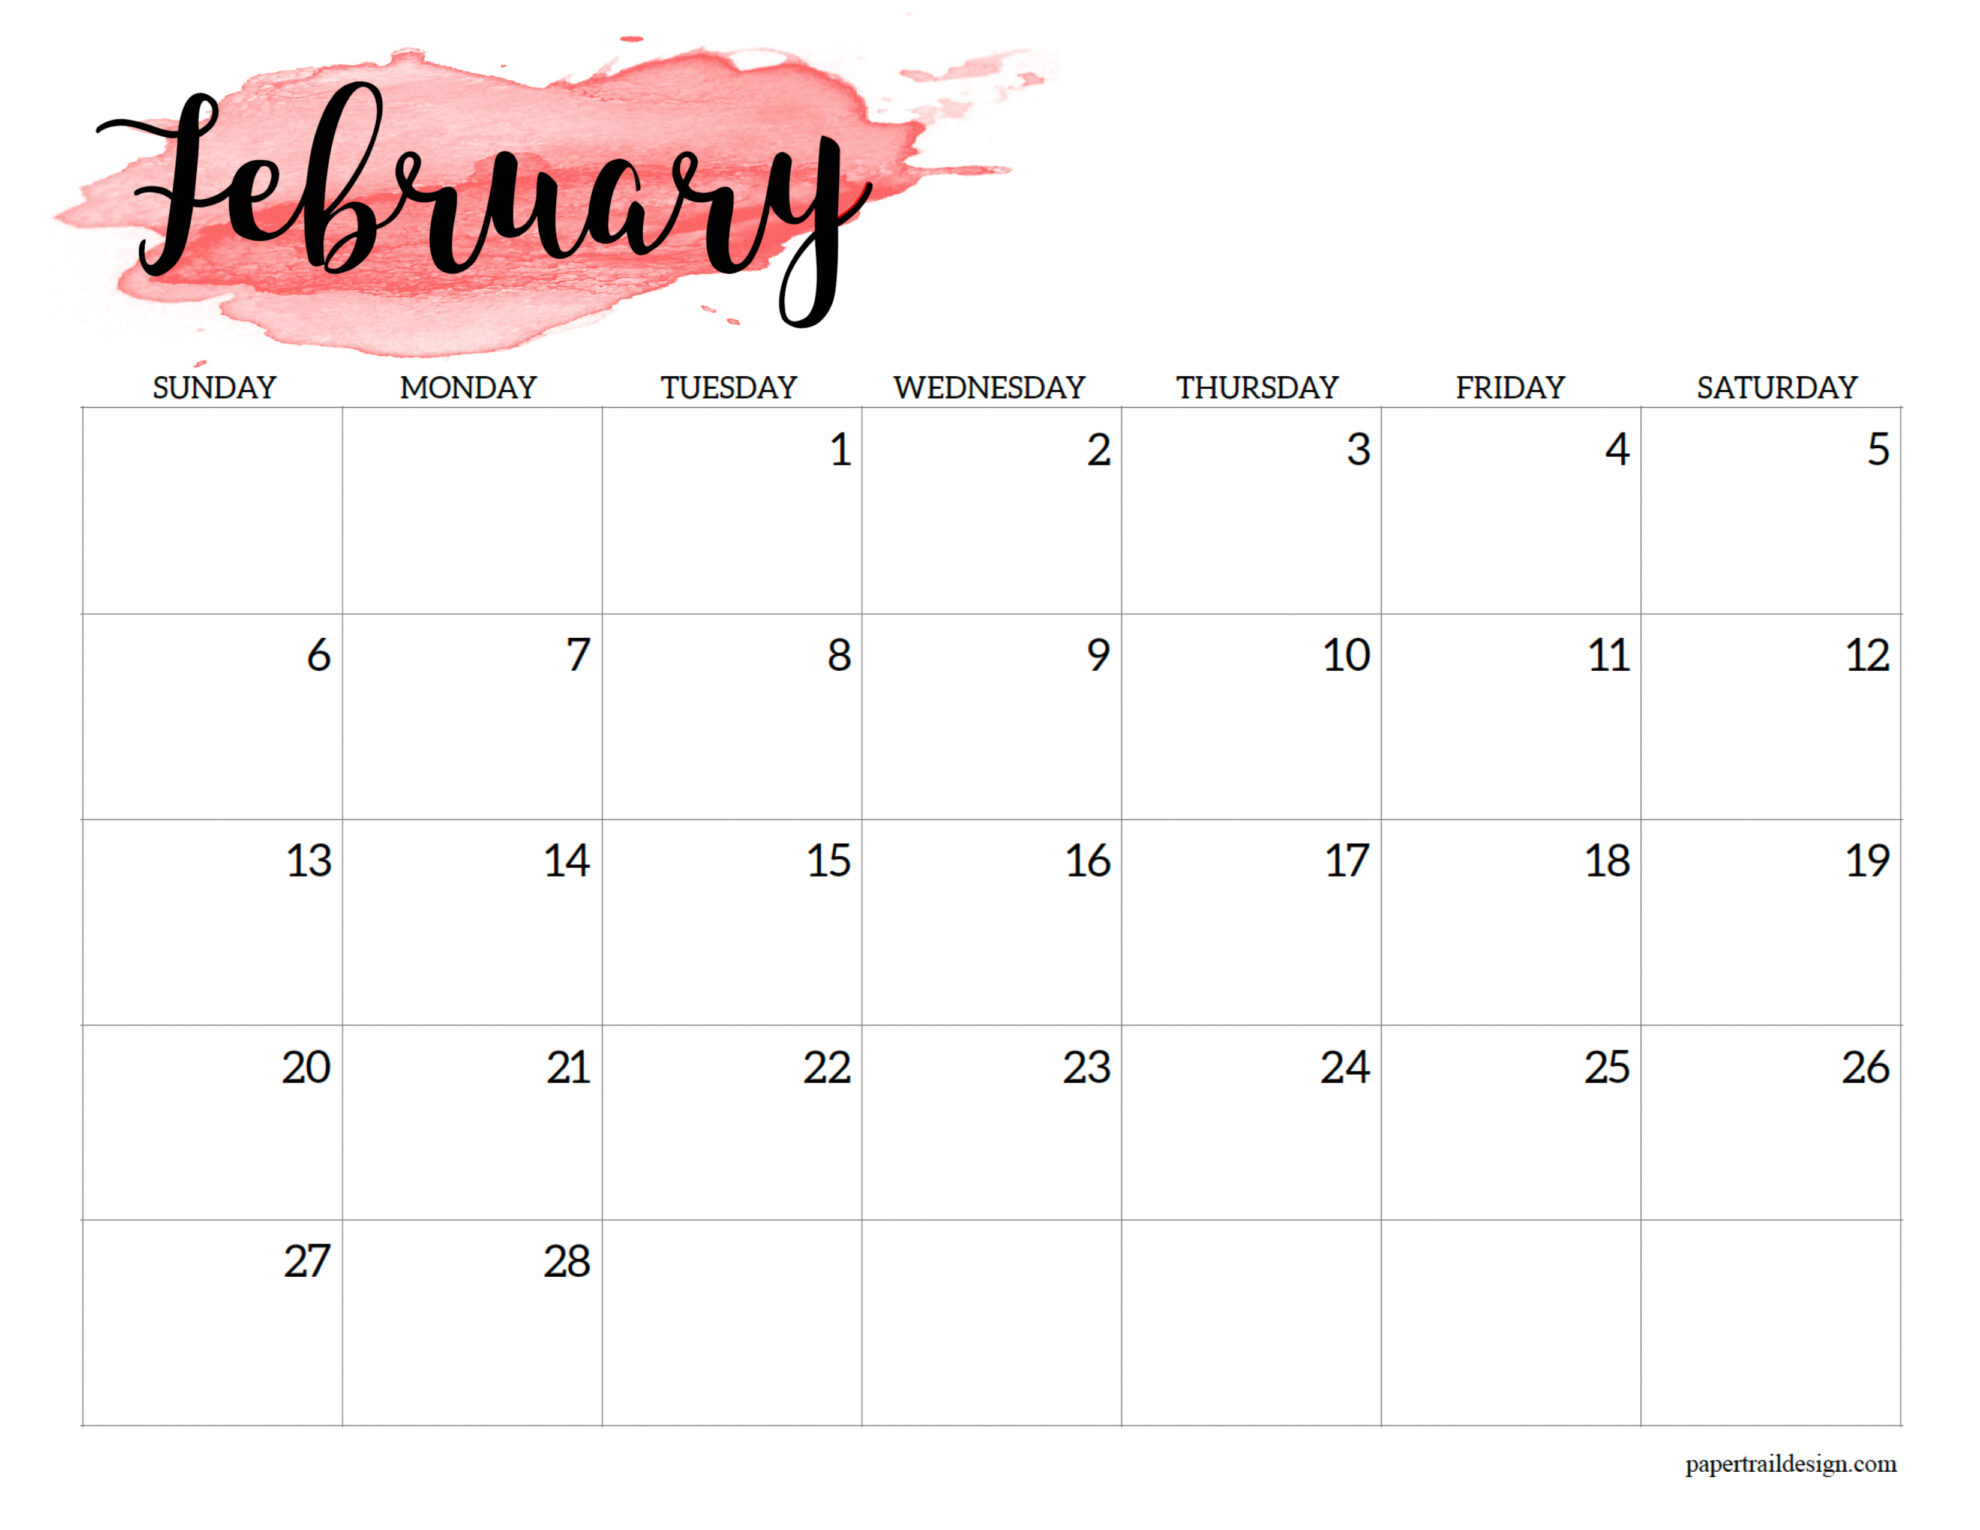 February 2022 Calendar Template 2022 Calendar Printable - Watercolor - Paper Trail Design